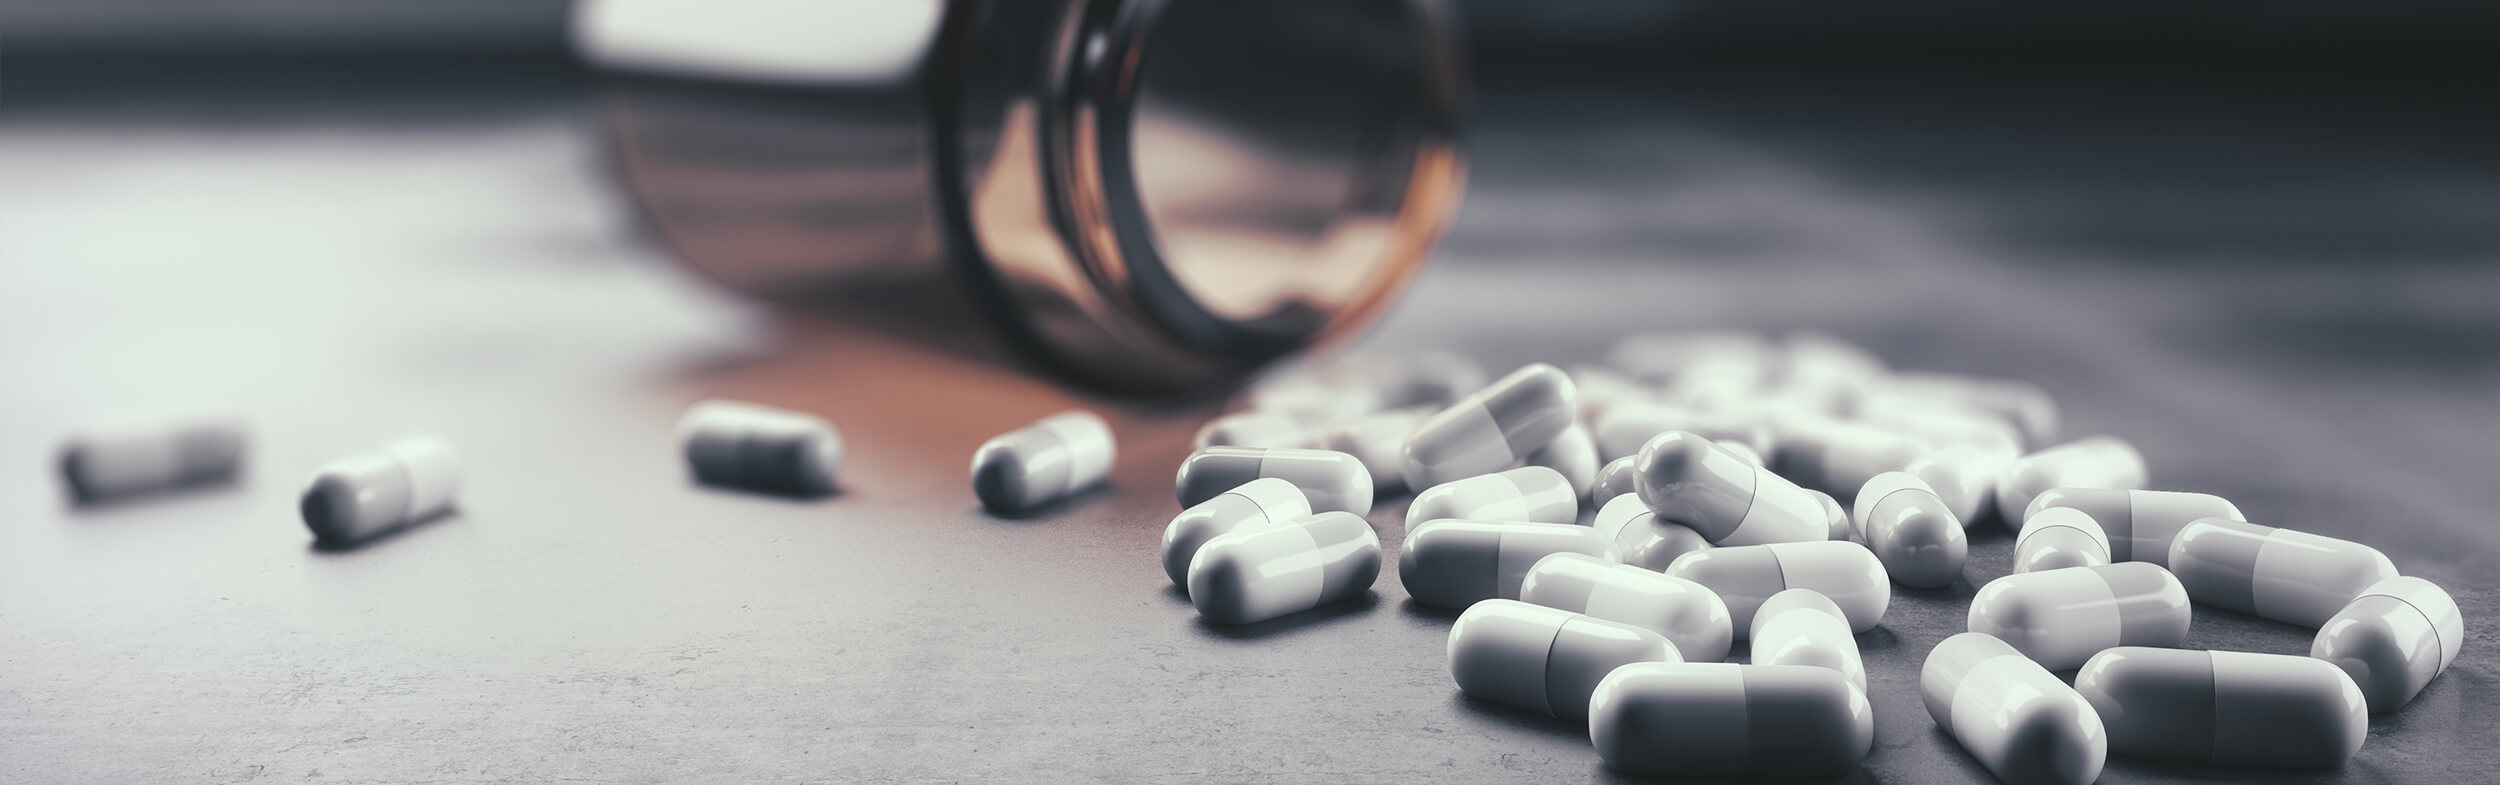 Treating Prescription Pain Reliever Drug Addiction